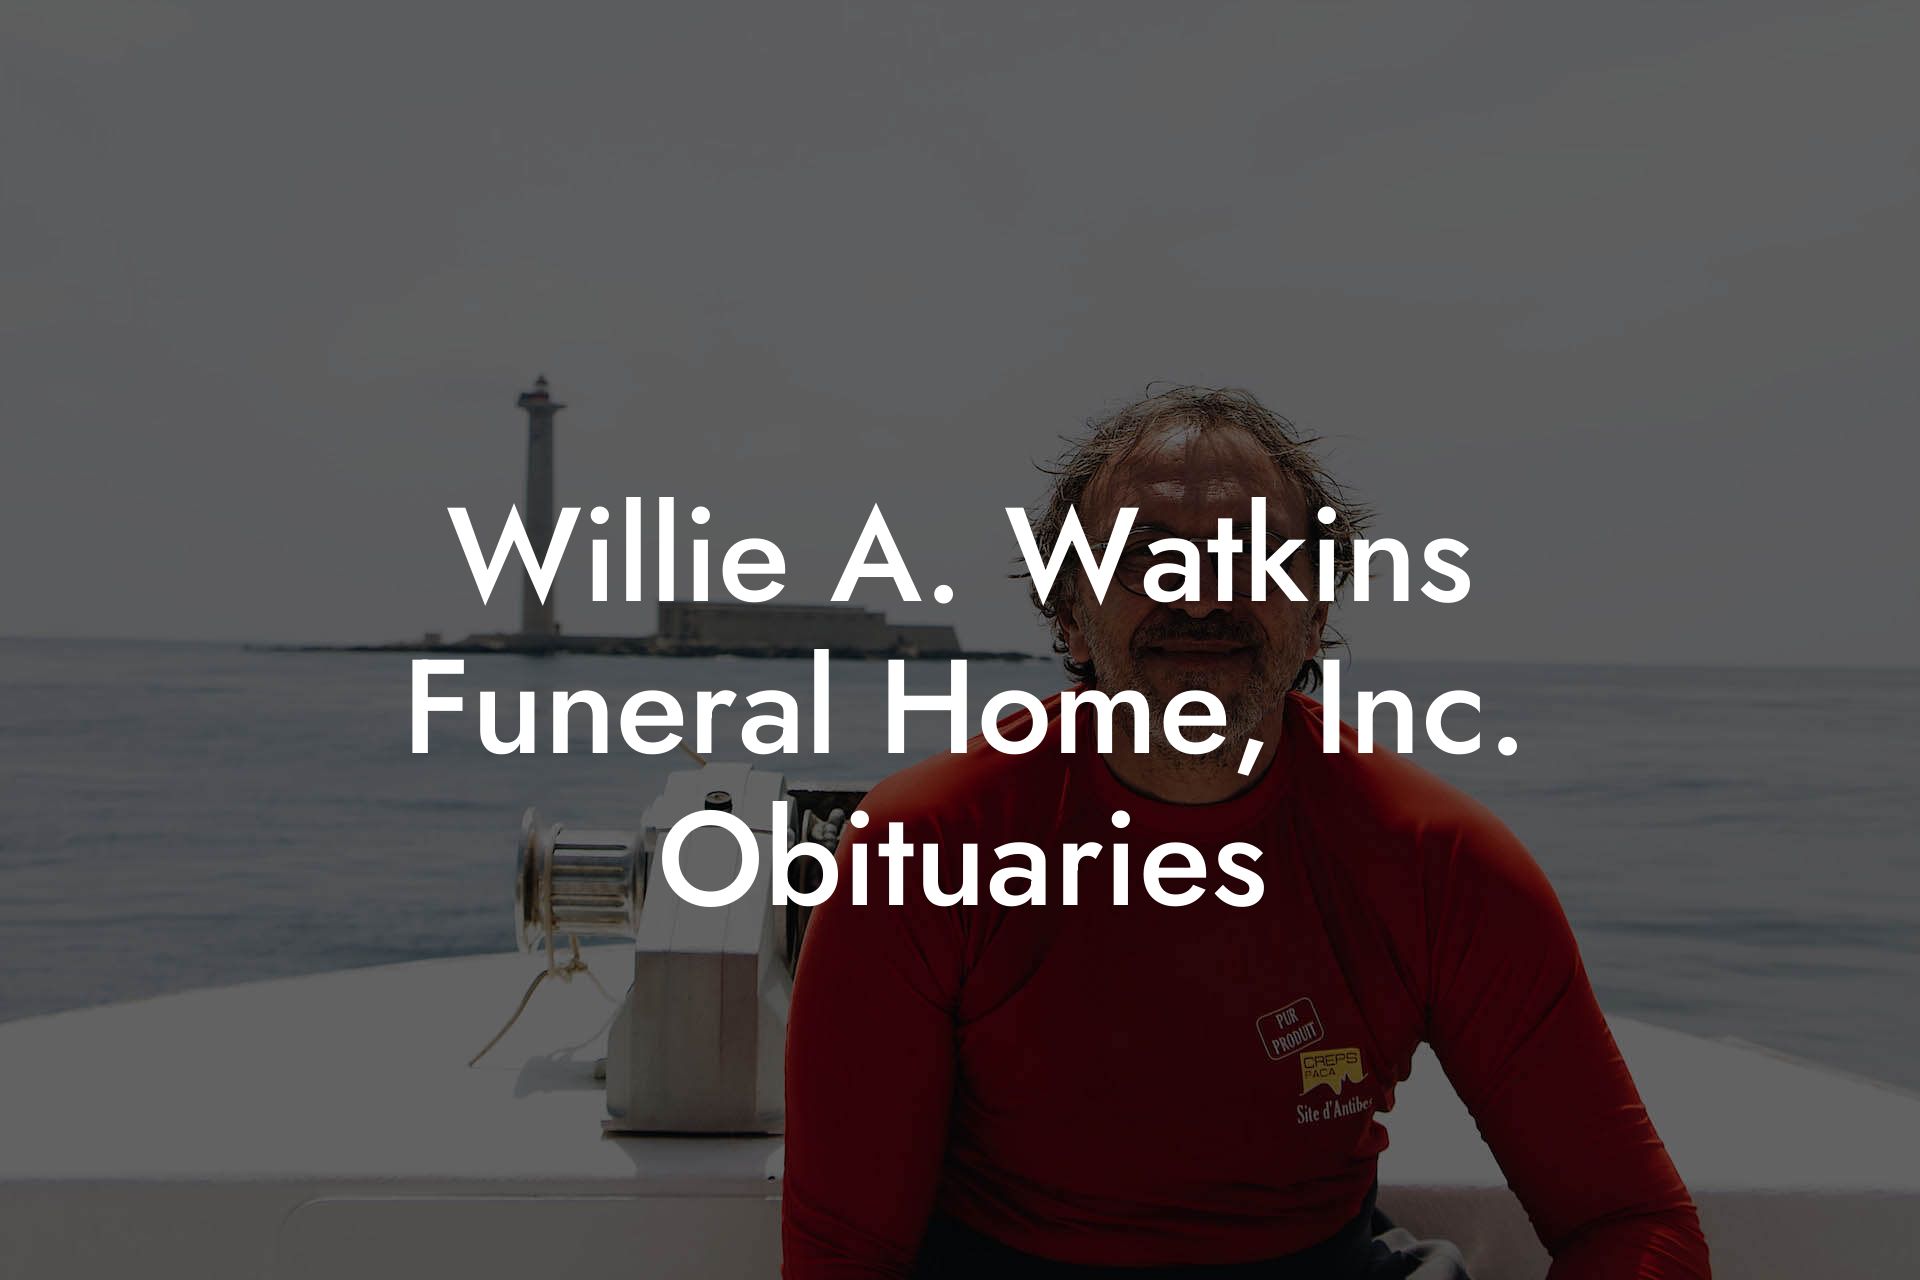 Willie A. Watkins Funeral Home, Inc. Obituaries